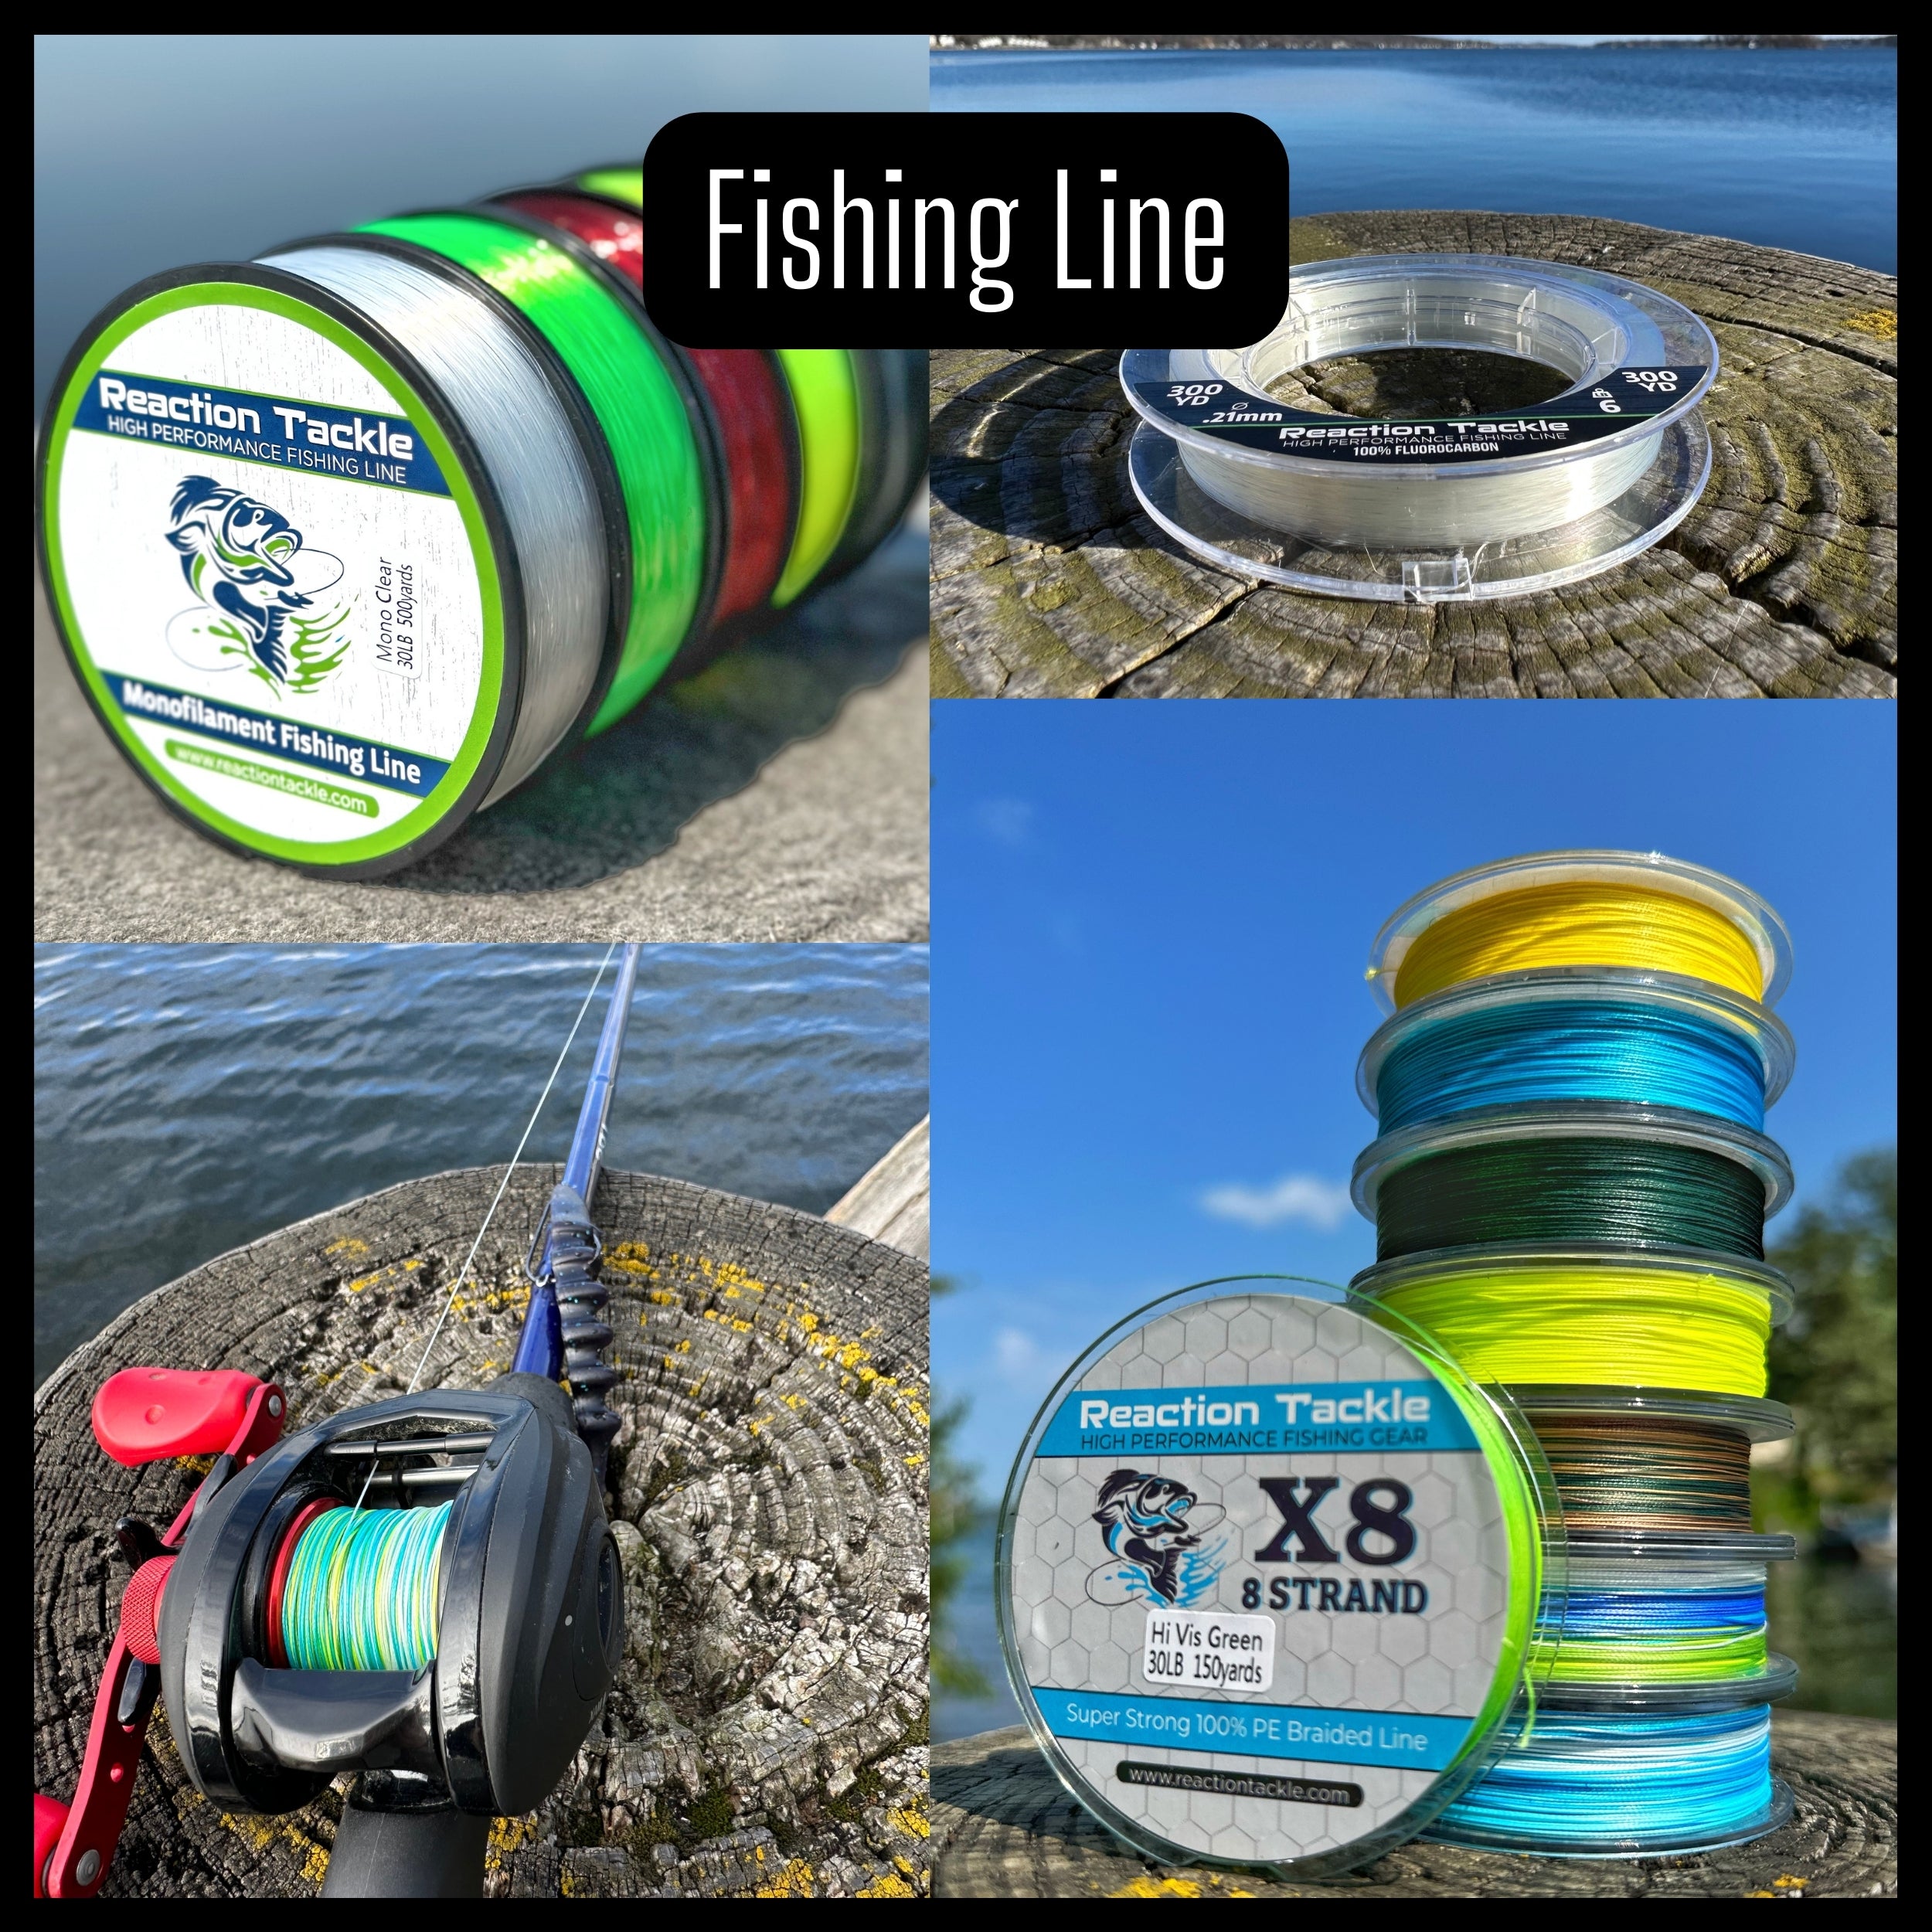 Reaction Tackle X8 Braided Fishing Line- Hi Vis Yellow 8 Strand